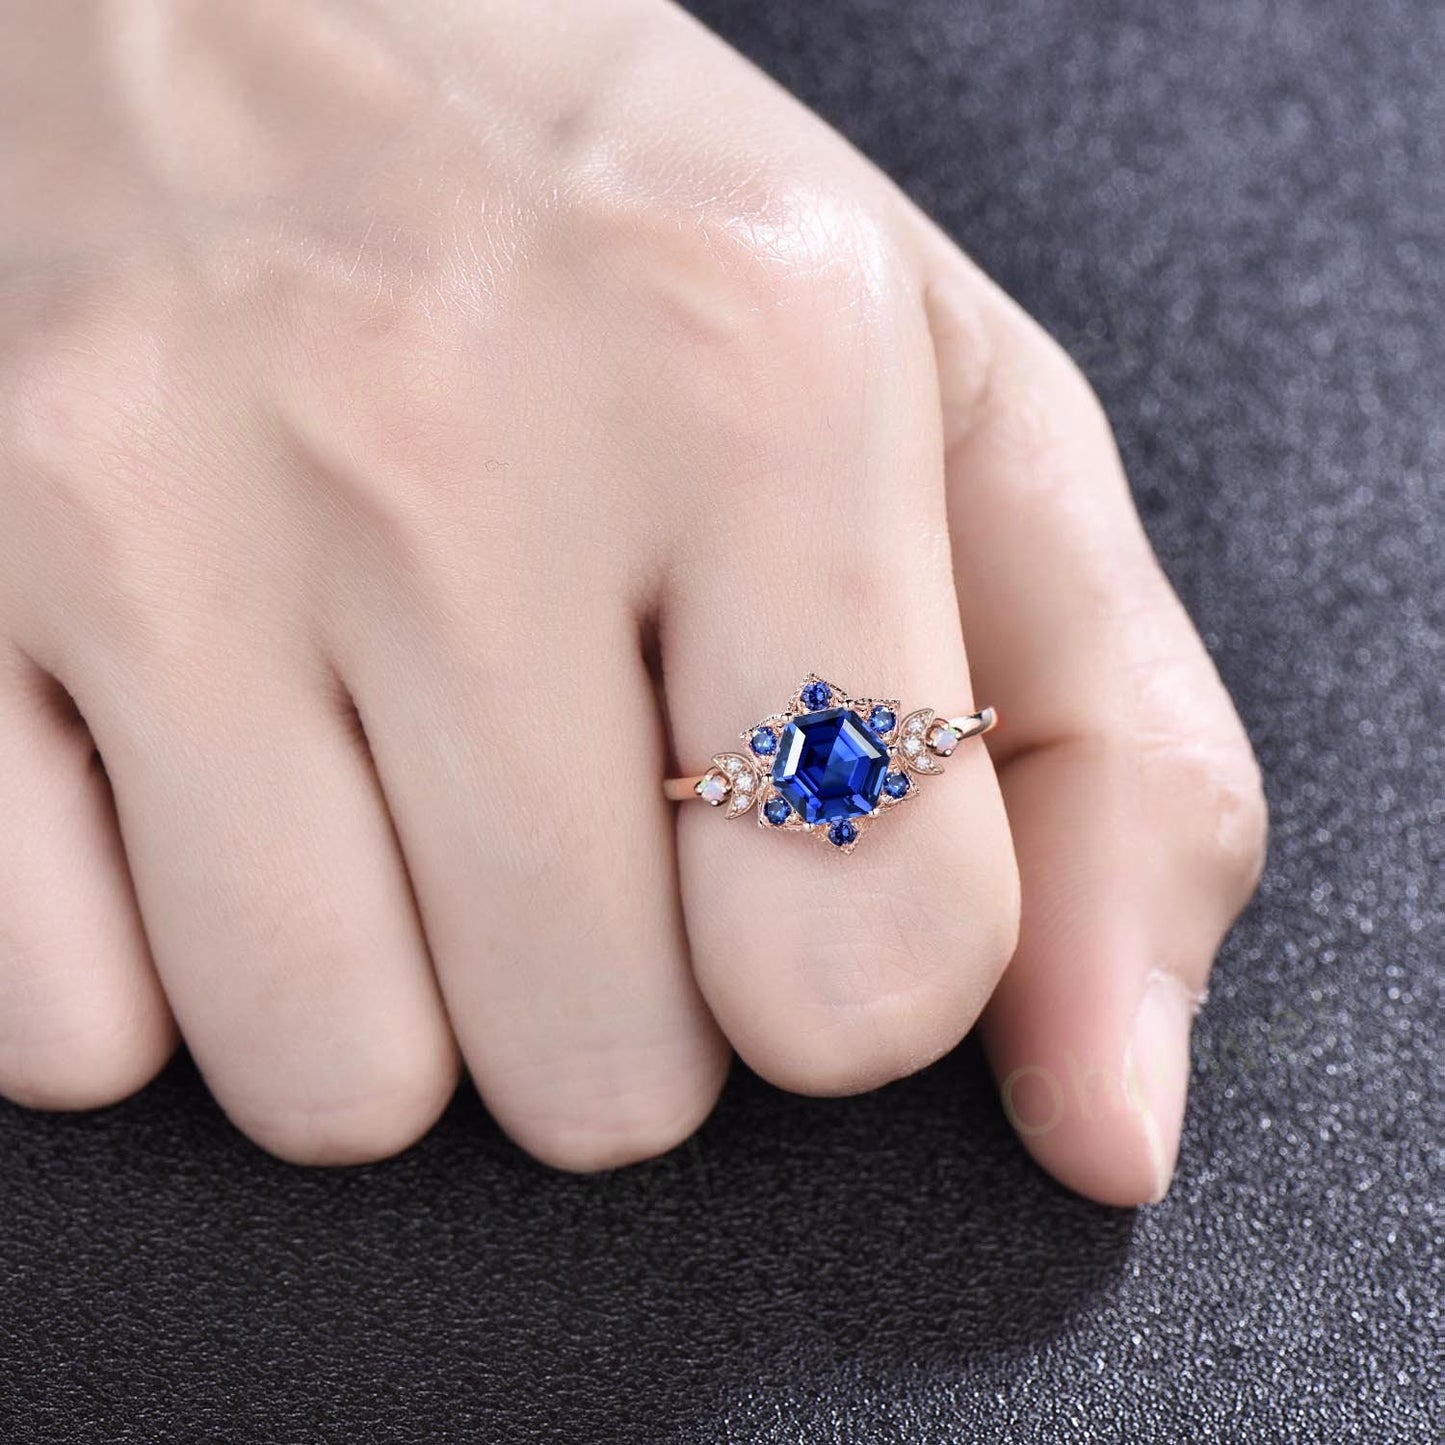 Vintage Hexagon blue sapphire engagement ring solid 14k yellow gold milgrain floral moon opal diamond ring women gemstone wedding ring gift